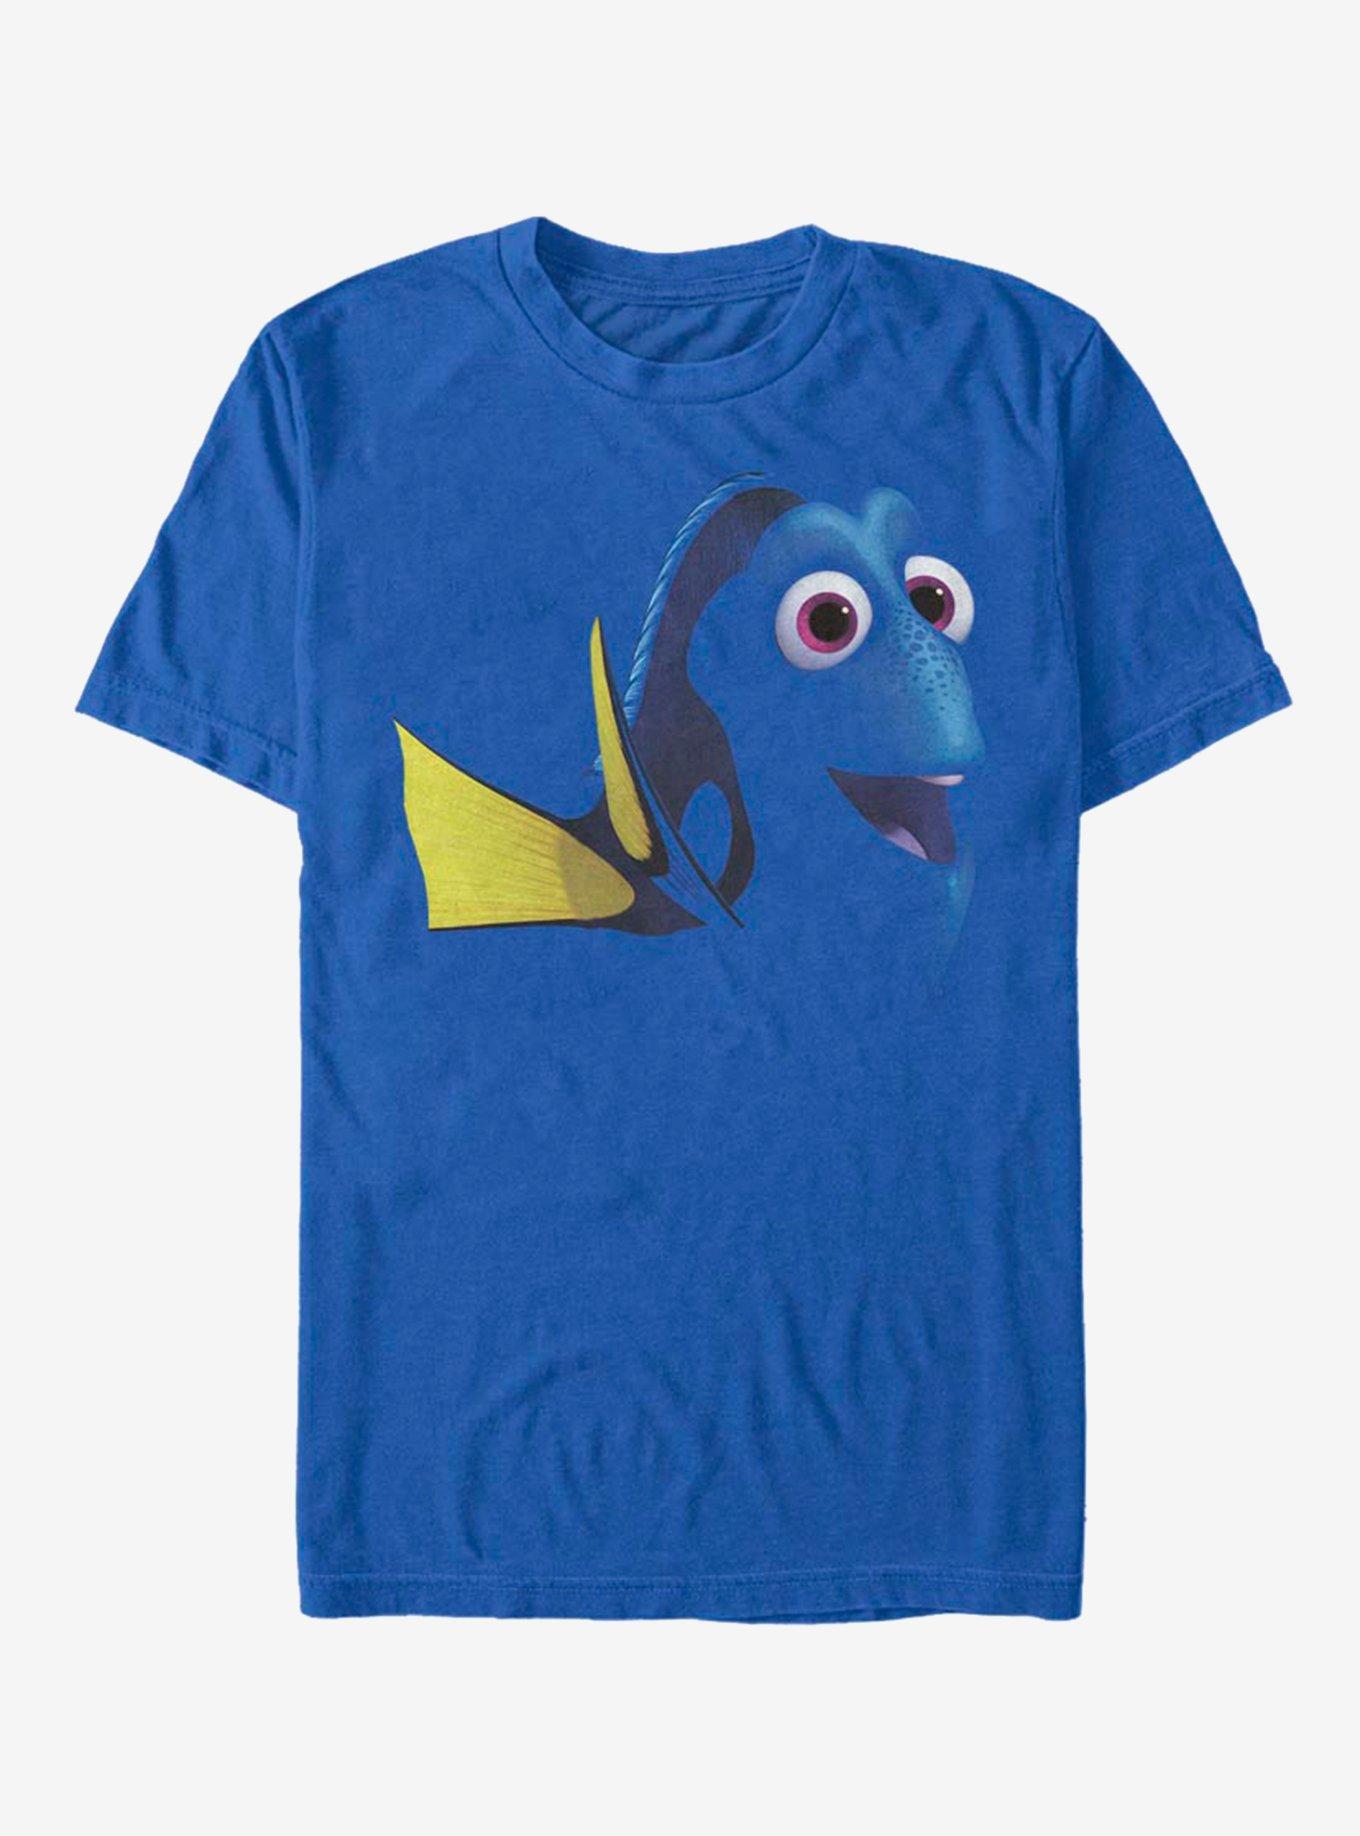 Disney Pixar Finding Nemo Dory Blue T-Shirt, ROYAL, hi-res